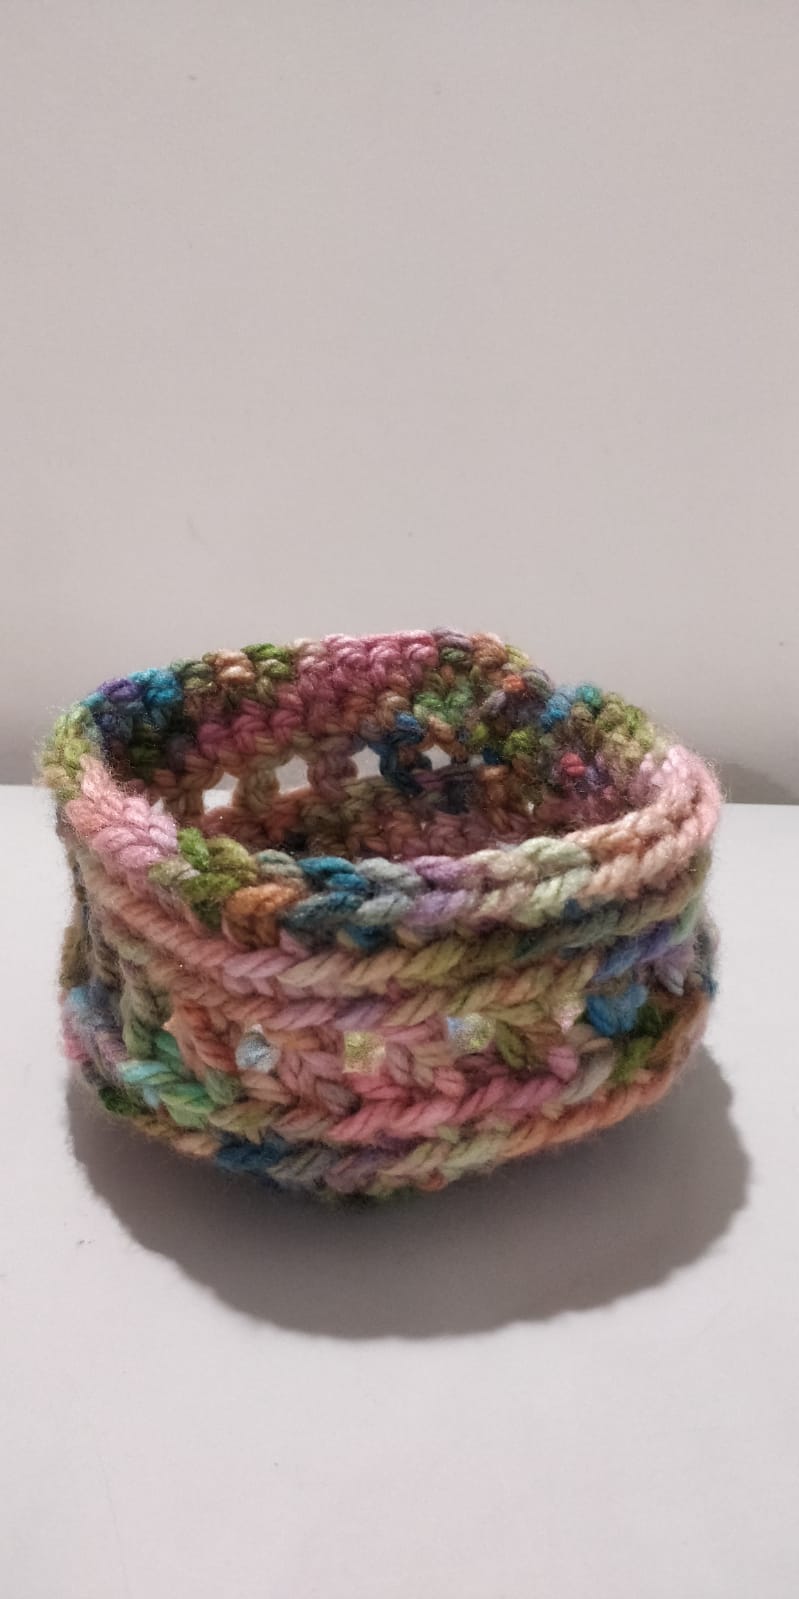 Crochet Pattern: Rainbow Storage Basket